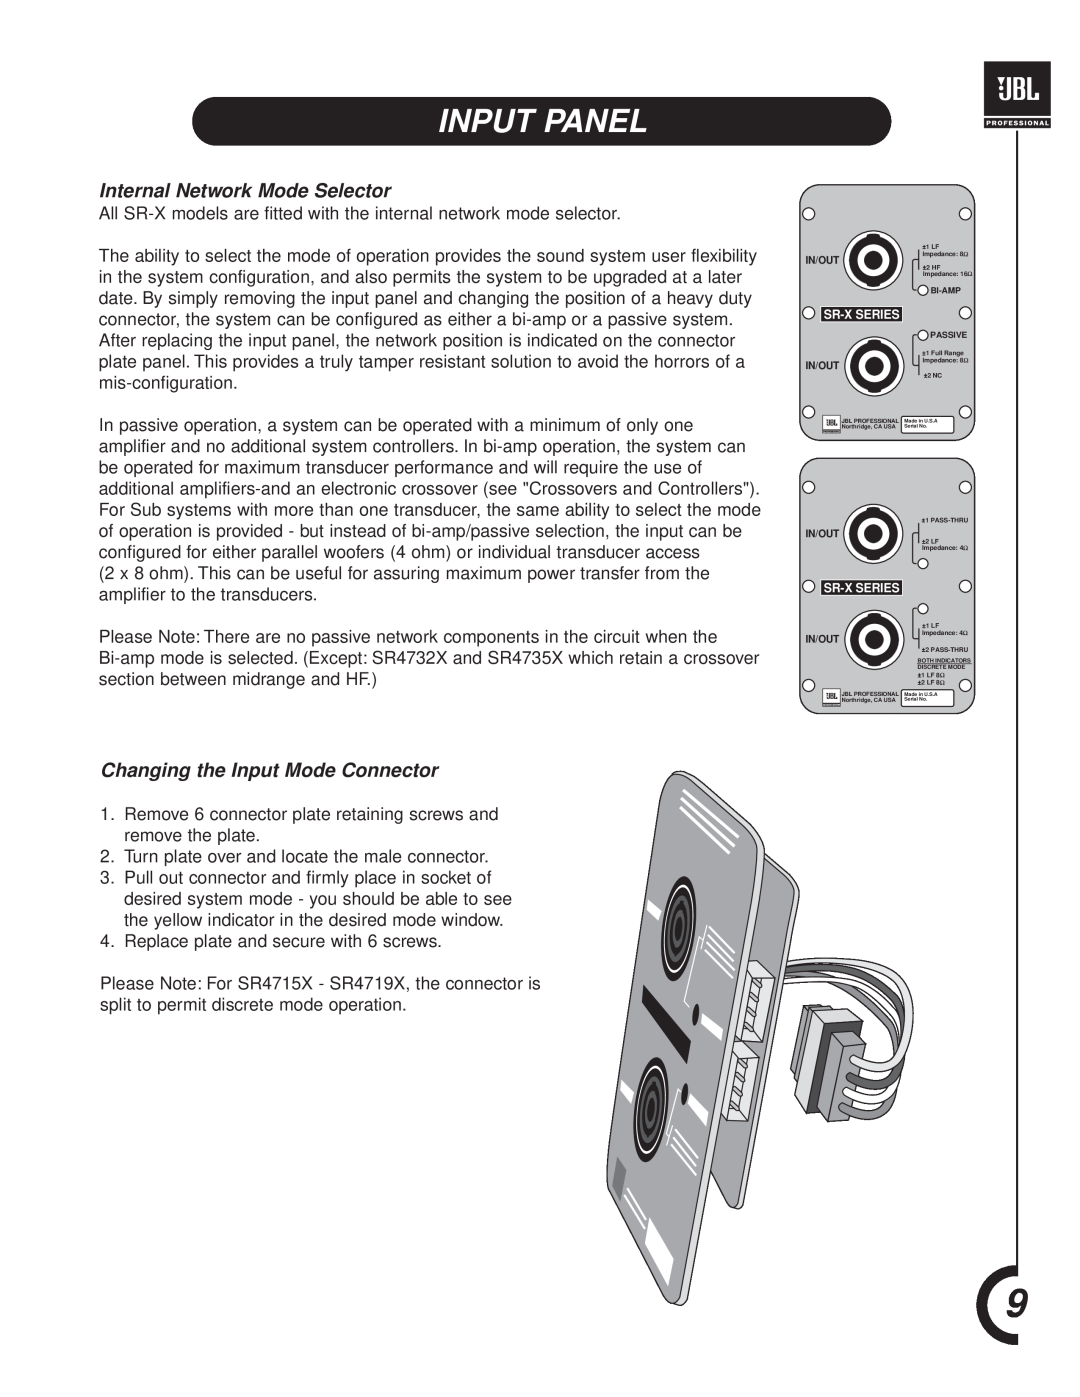 JBL SR-X Series manual Input Panel, Internal Network Mode Selector, Changing the Input Mode Connector 